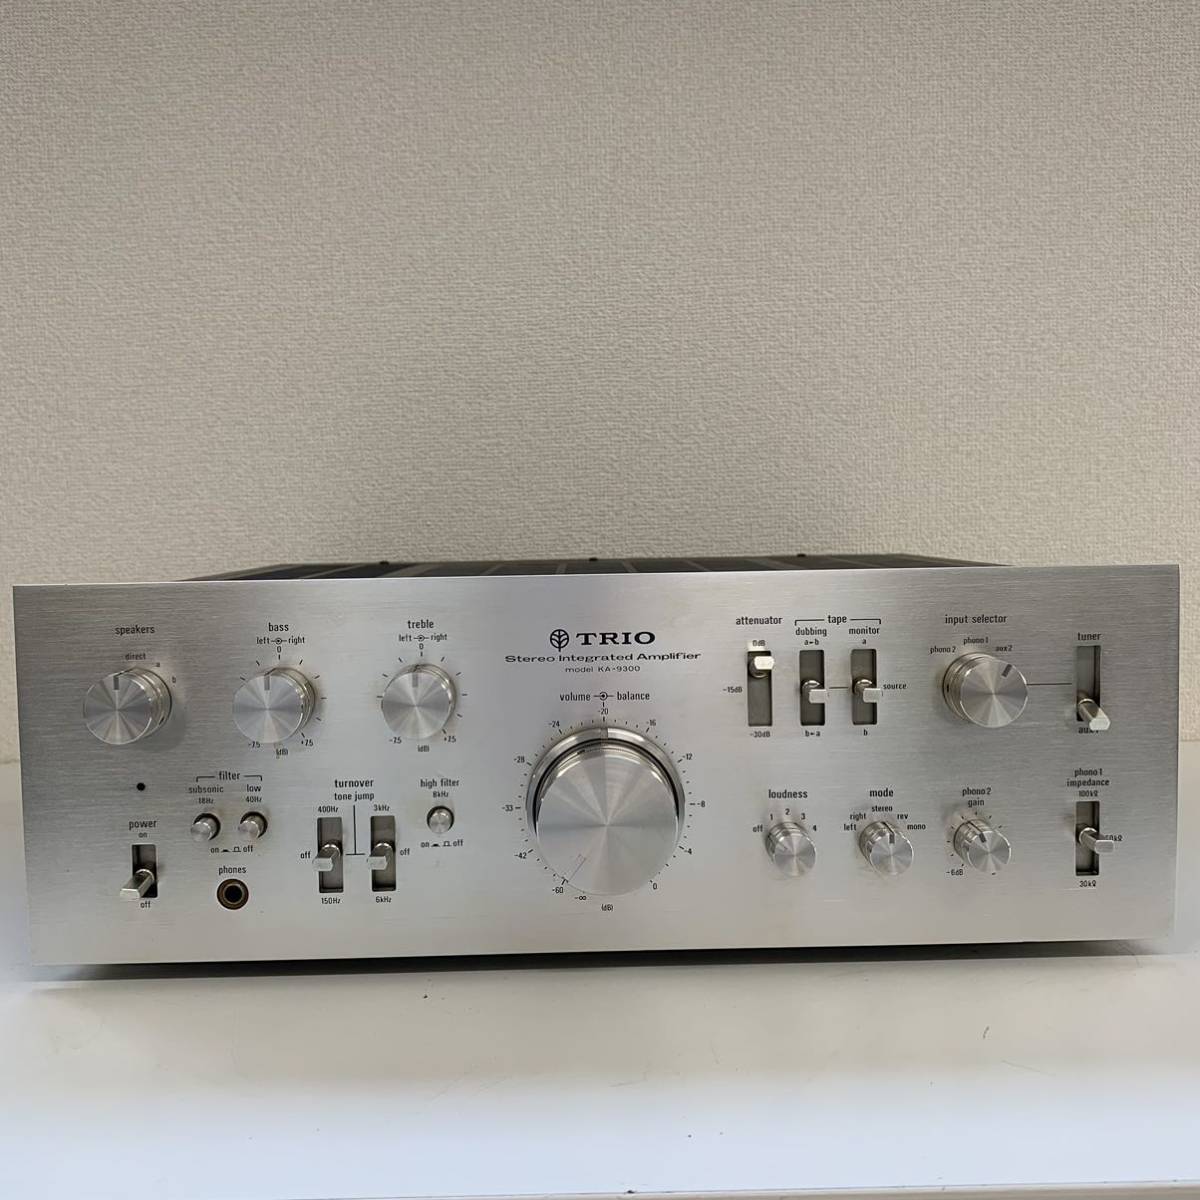 (Hd2 On) TRIO KA-9300 Stereo Integrated Amplifier アンプ プリメインアンプ 現状品 通電可 音出し可 オーディオ (BST47)